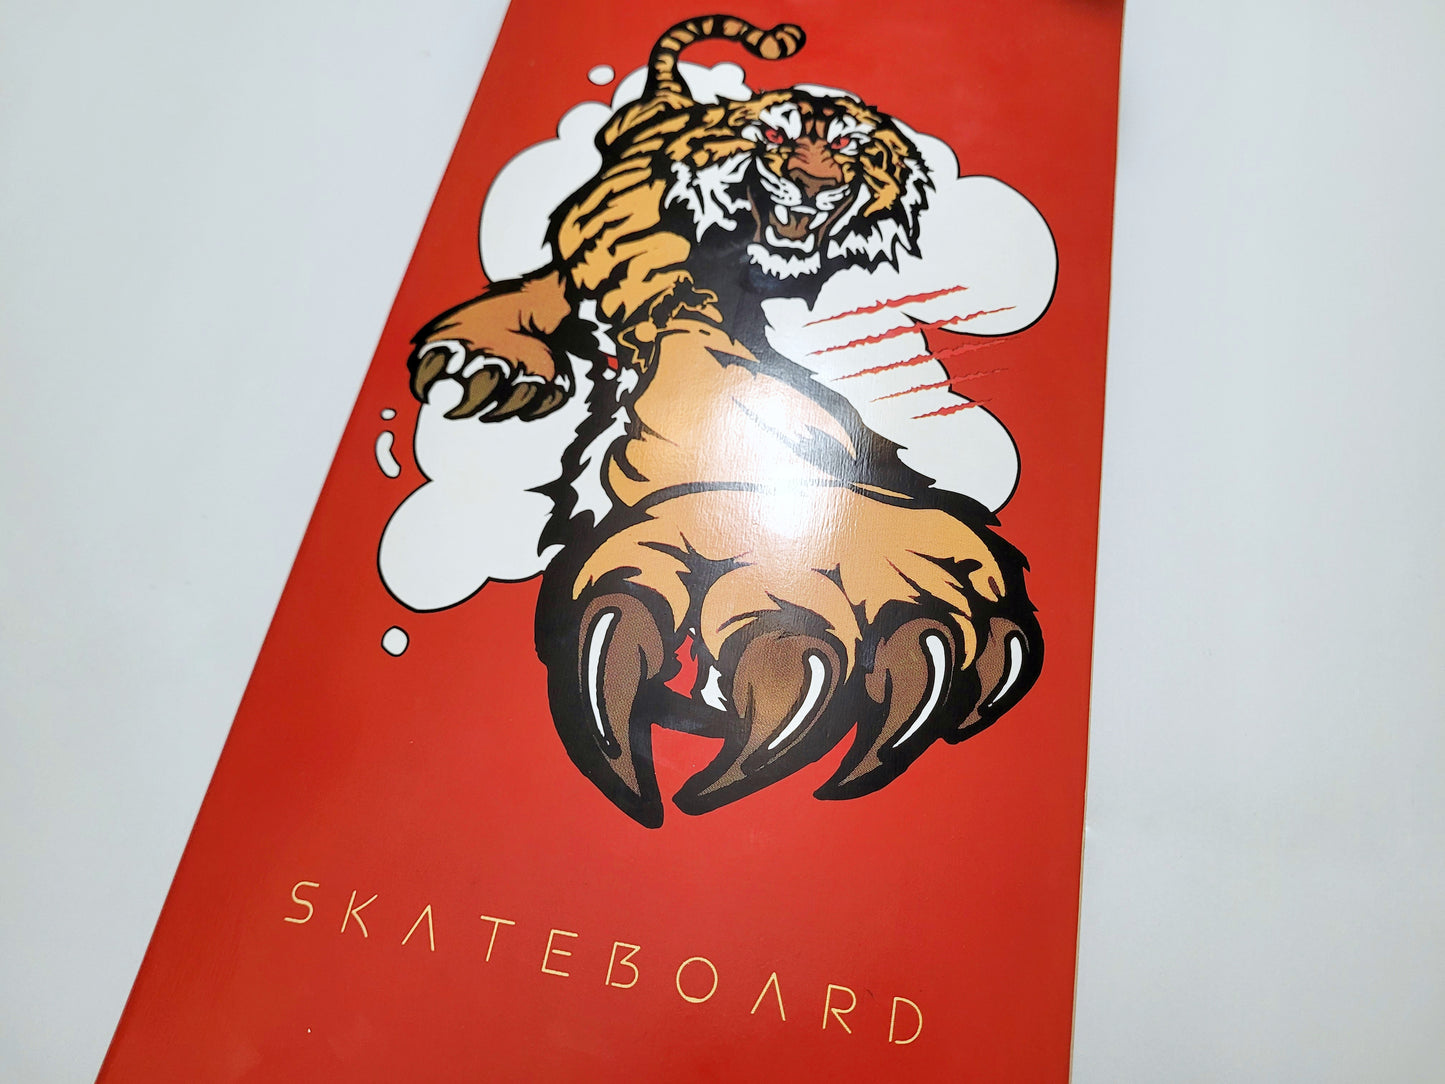 Koston 'Beast Mode' Skateboard